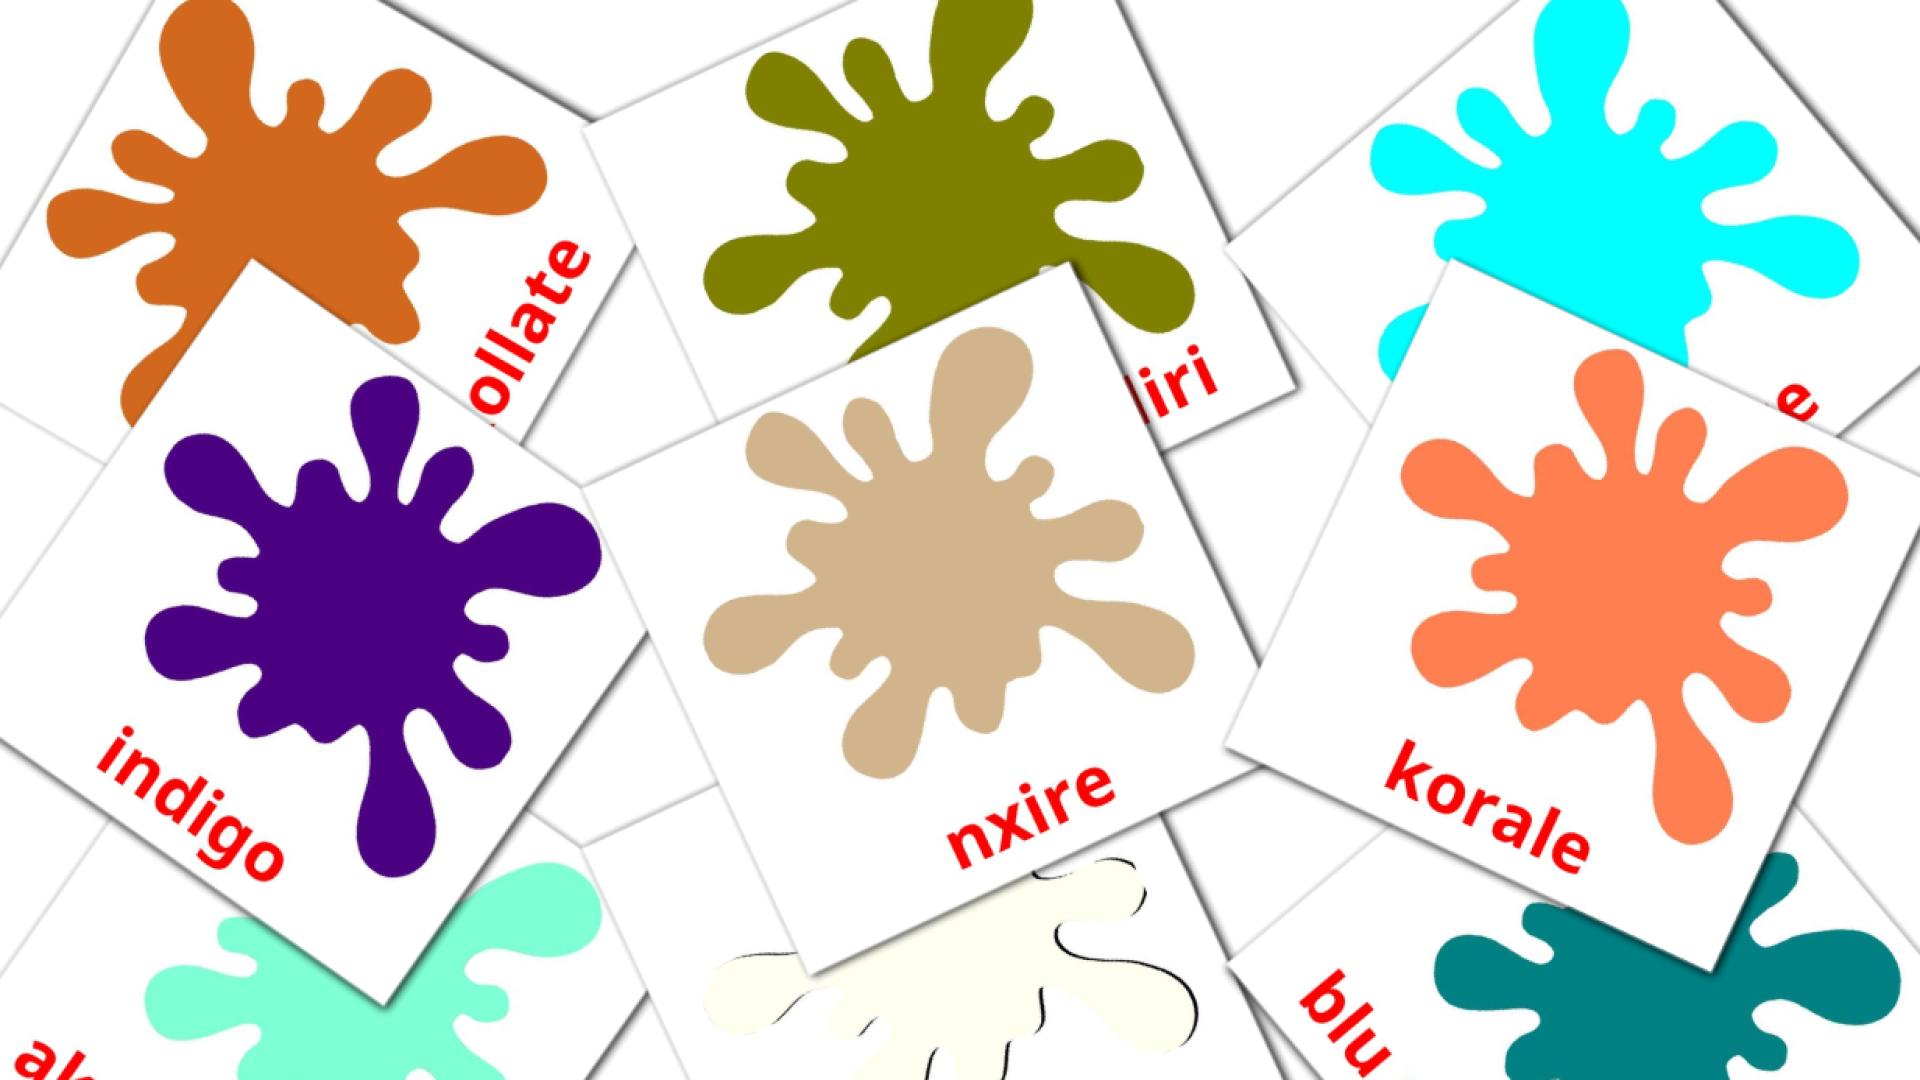 Secondary colors - albanian vocabulary cards